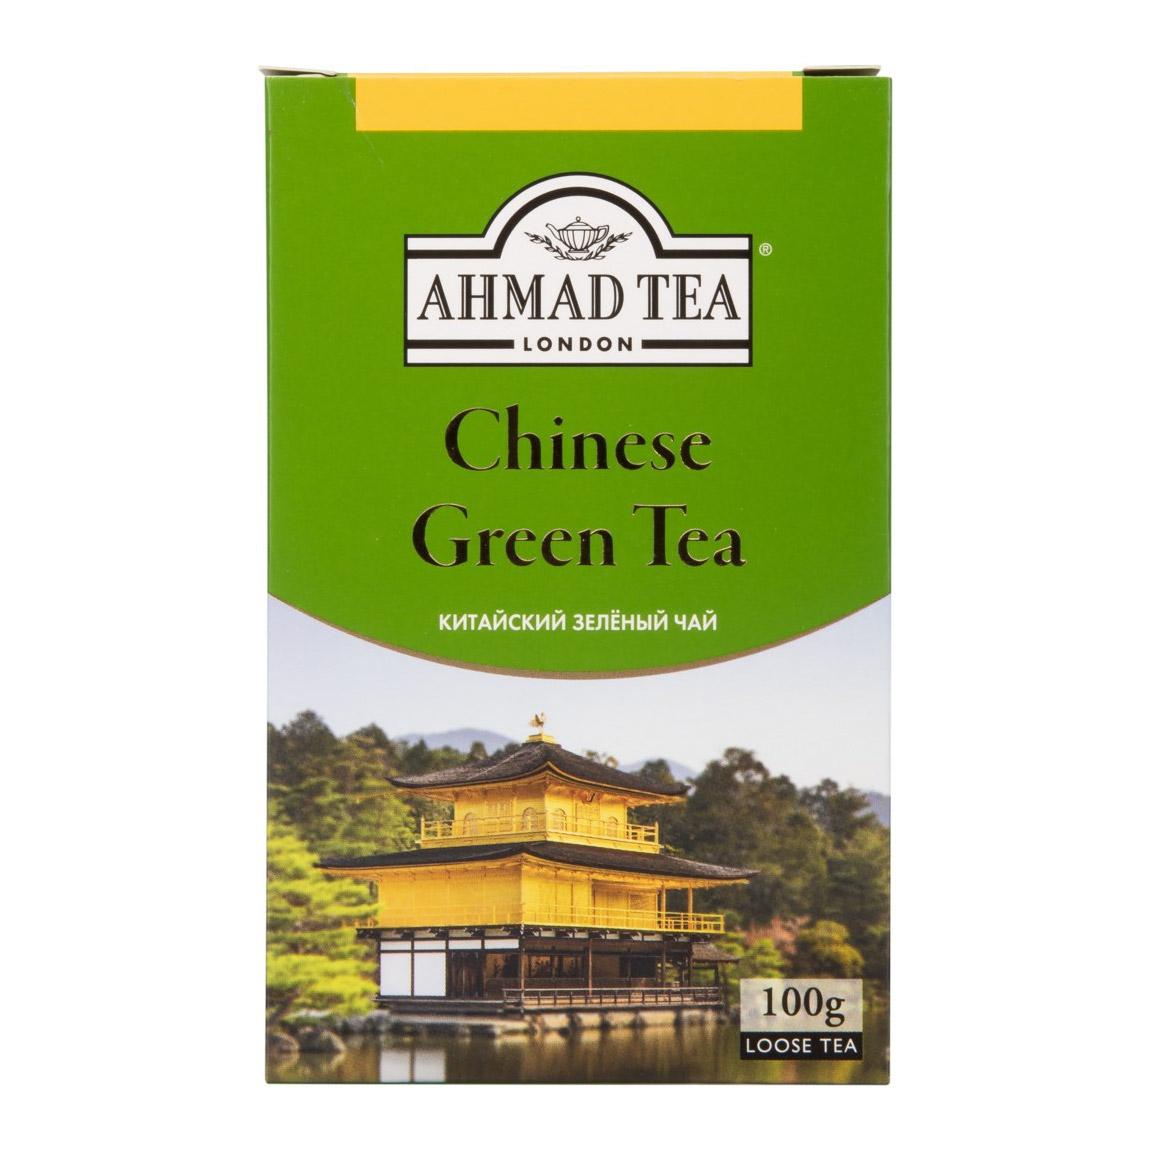 Чай Ahmad Tea Chinese Green зеленый 100 г чай chelton english green tea зеленый крупнолистовой 100 г